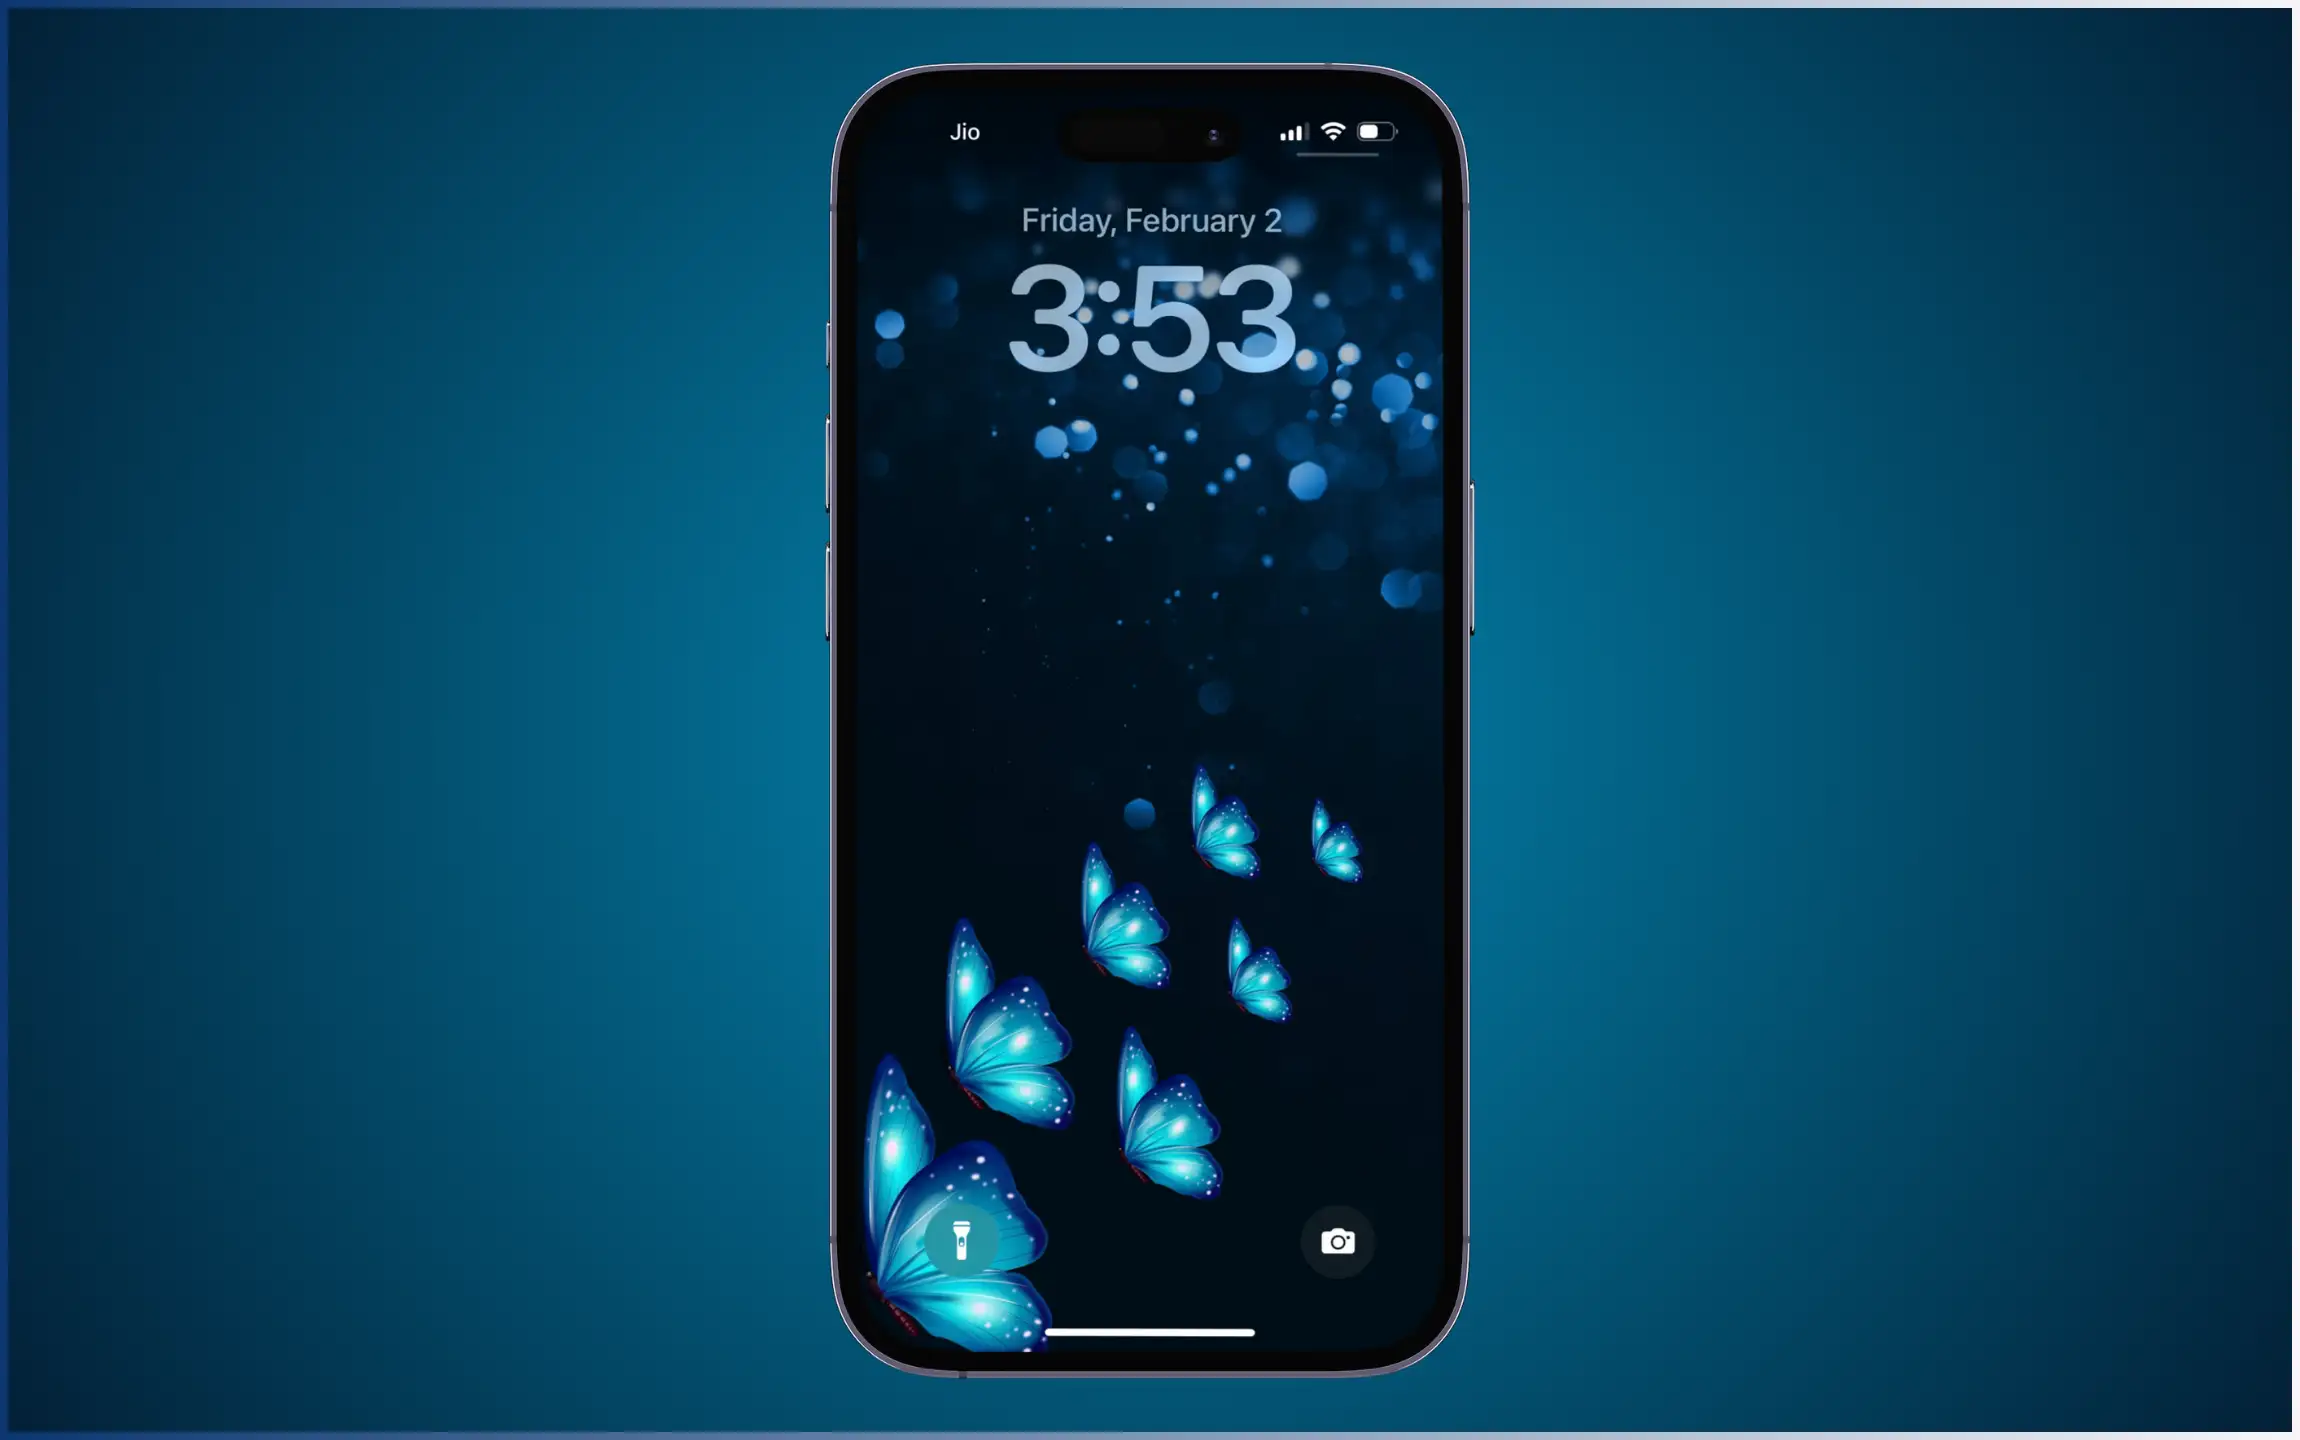 Blue Butterfly iPhone Wallpaper